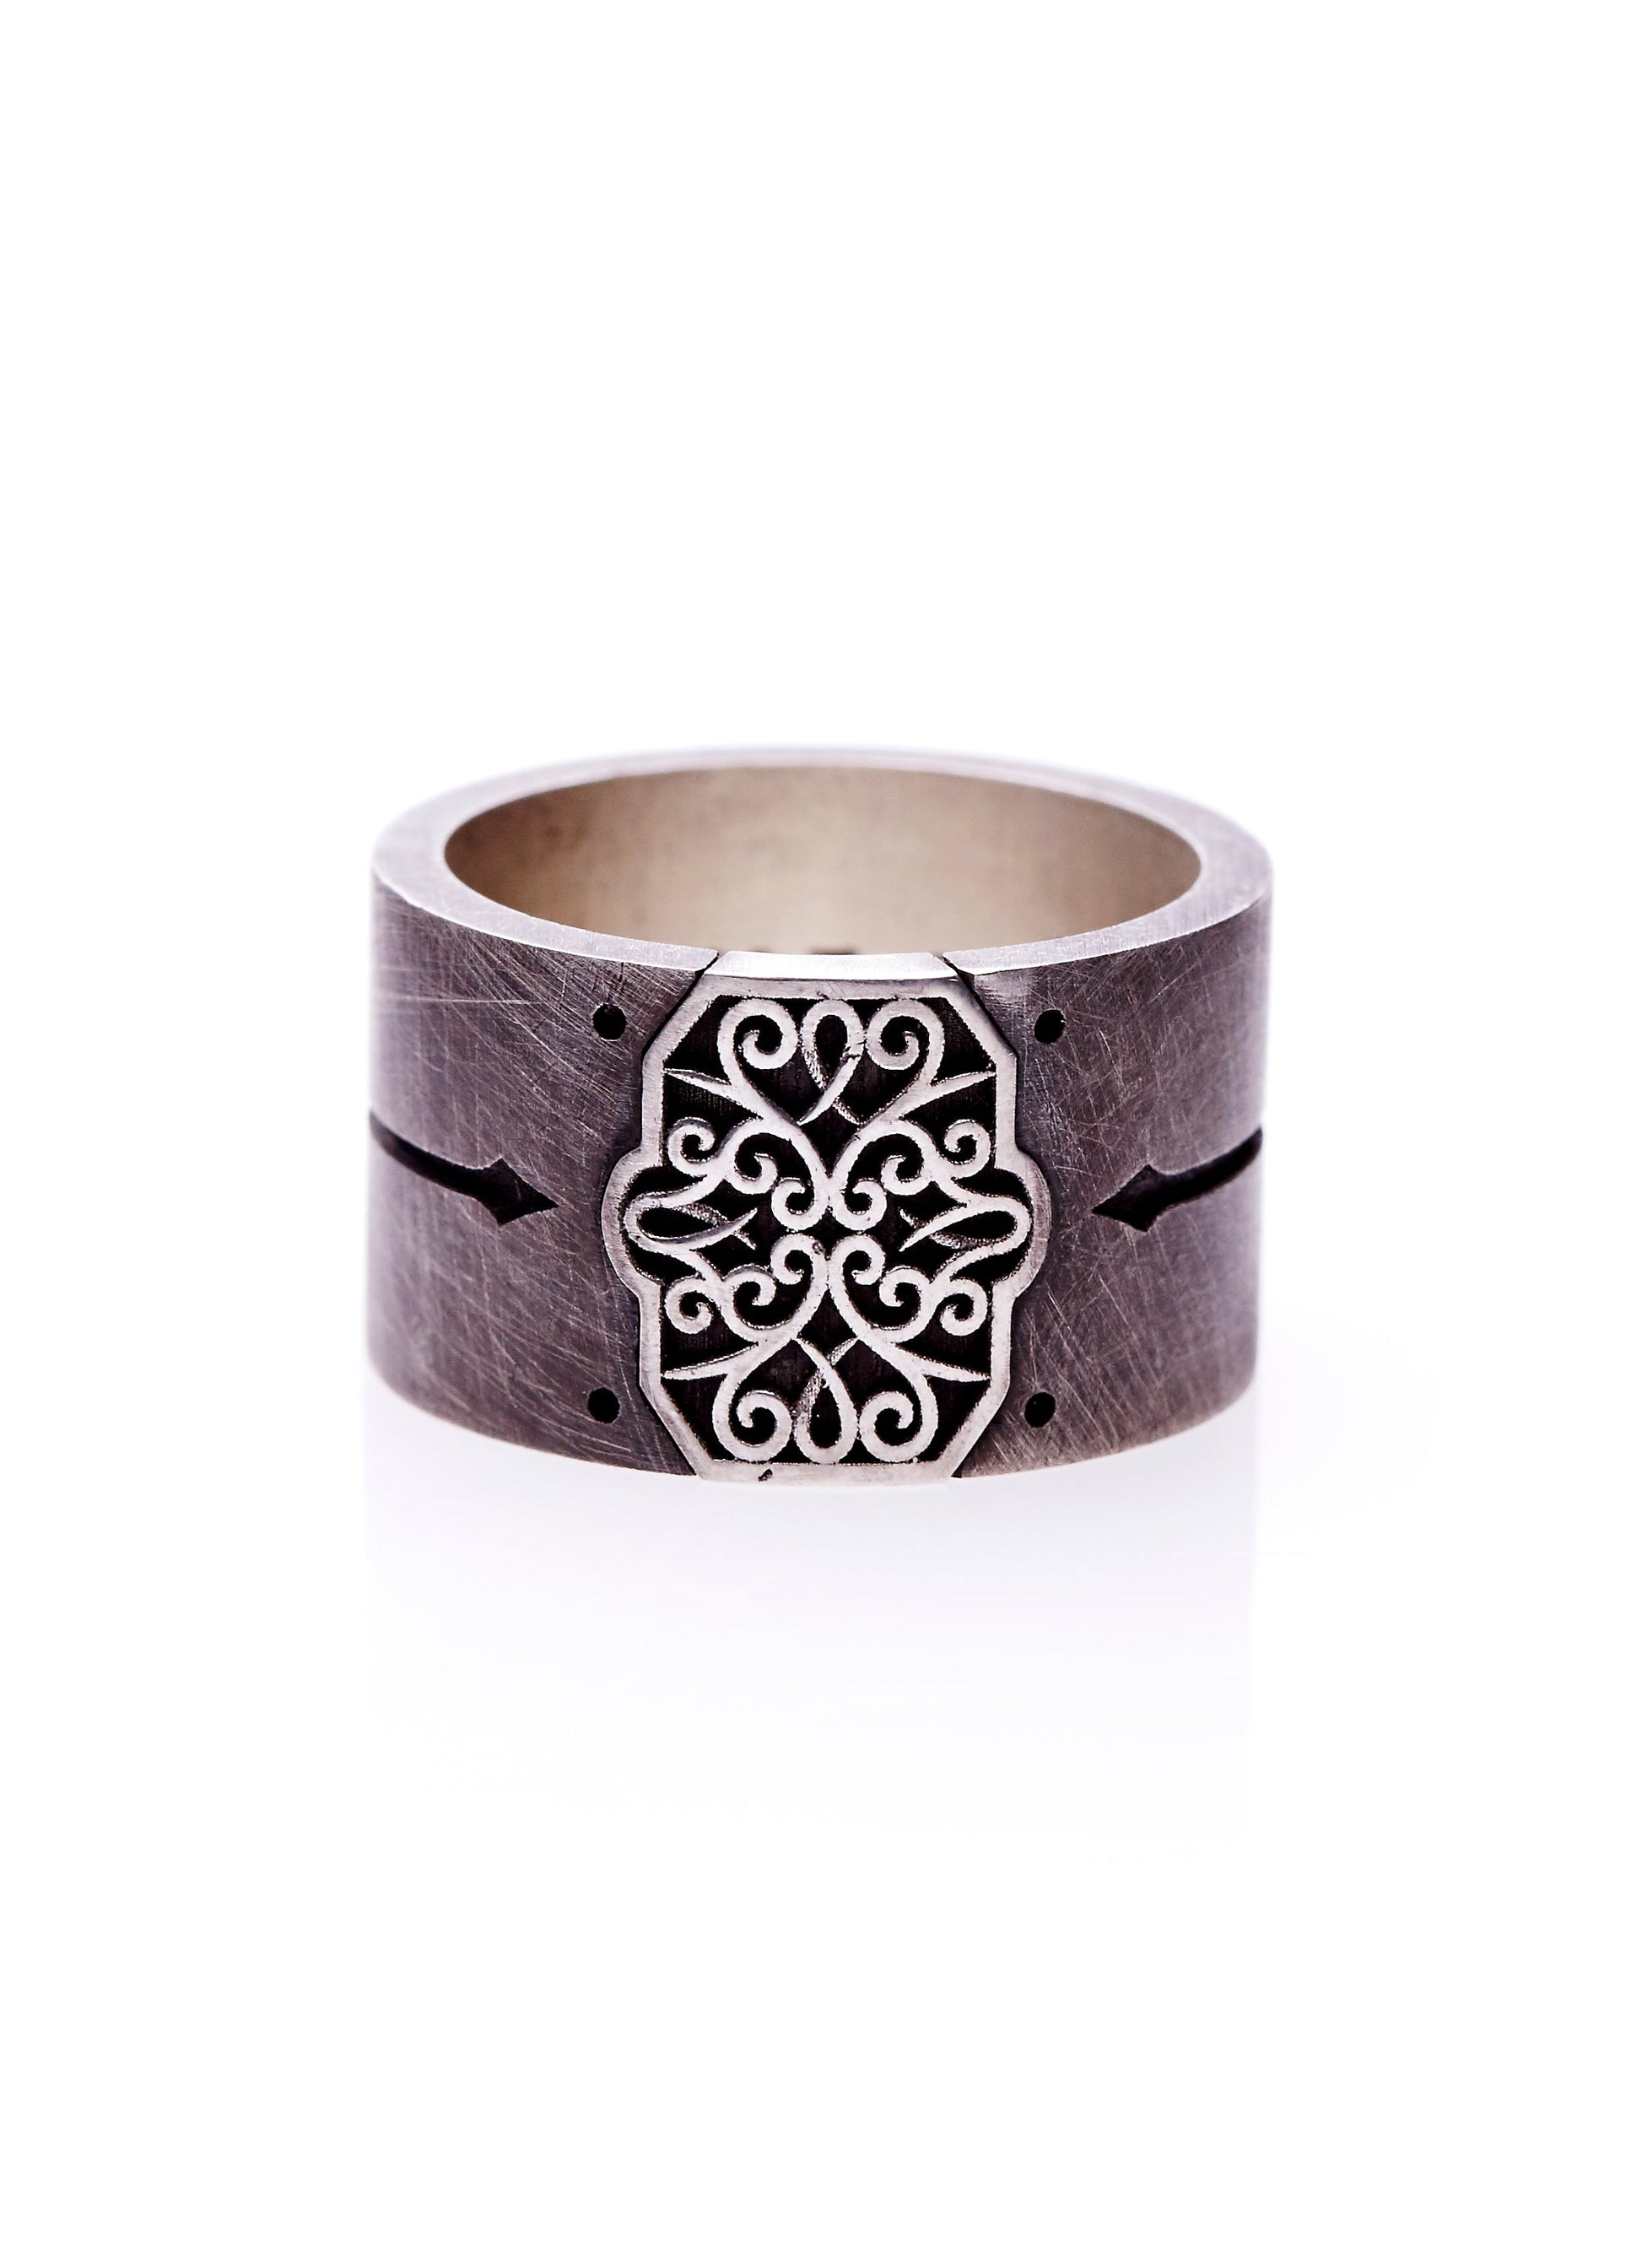 Oxidized Silver Arabesque Pattern Ring-jewelry-Harlin Jones-Sorrel Sky Gallery